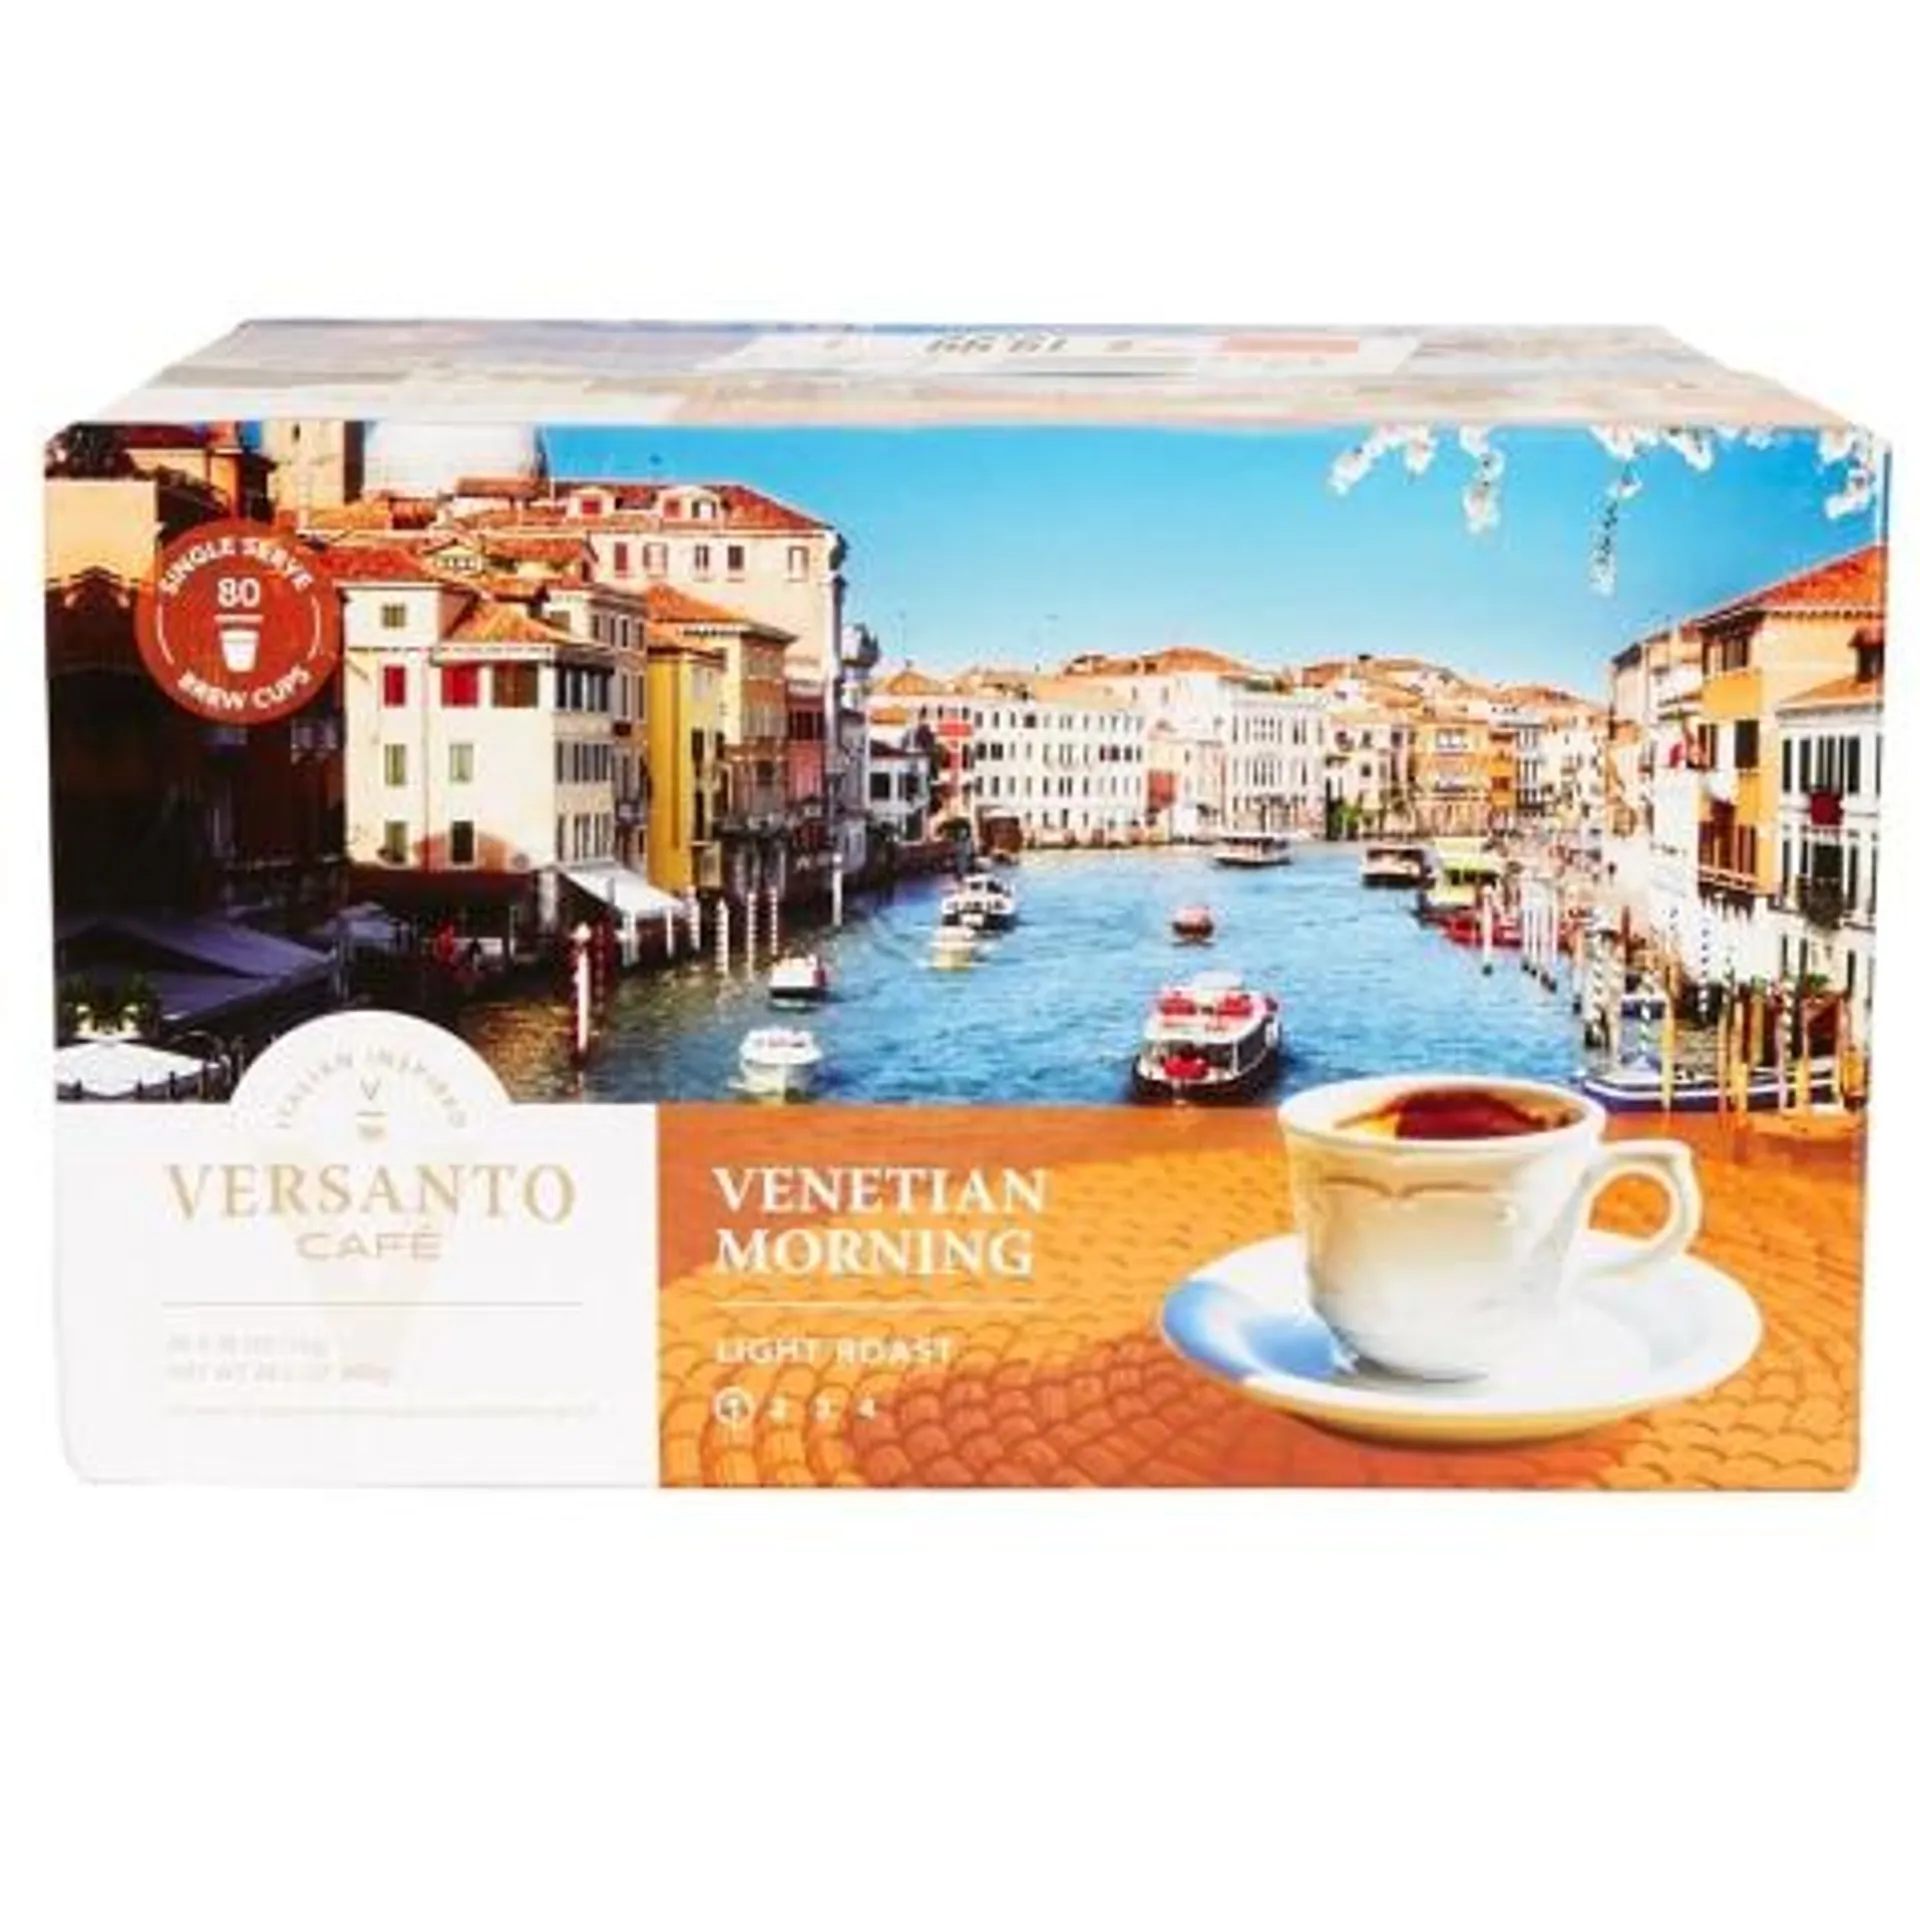 Versanto Cafe Venetian Morning Light Roast Coffee, 80 Count